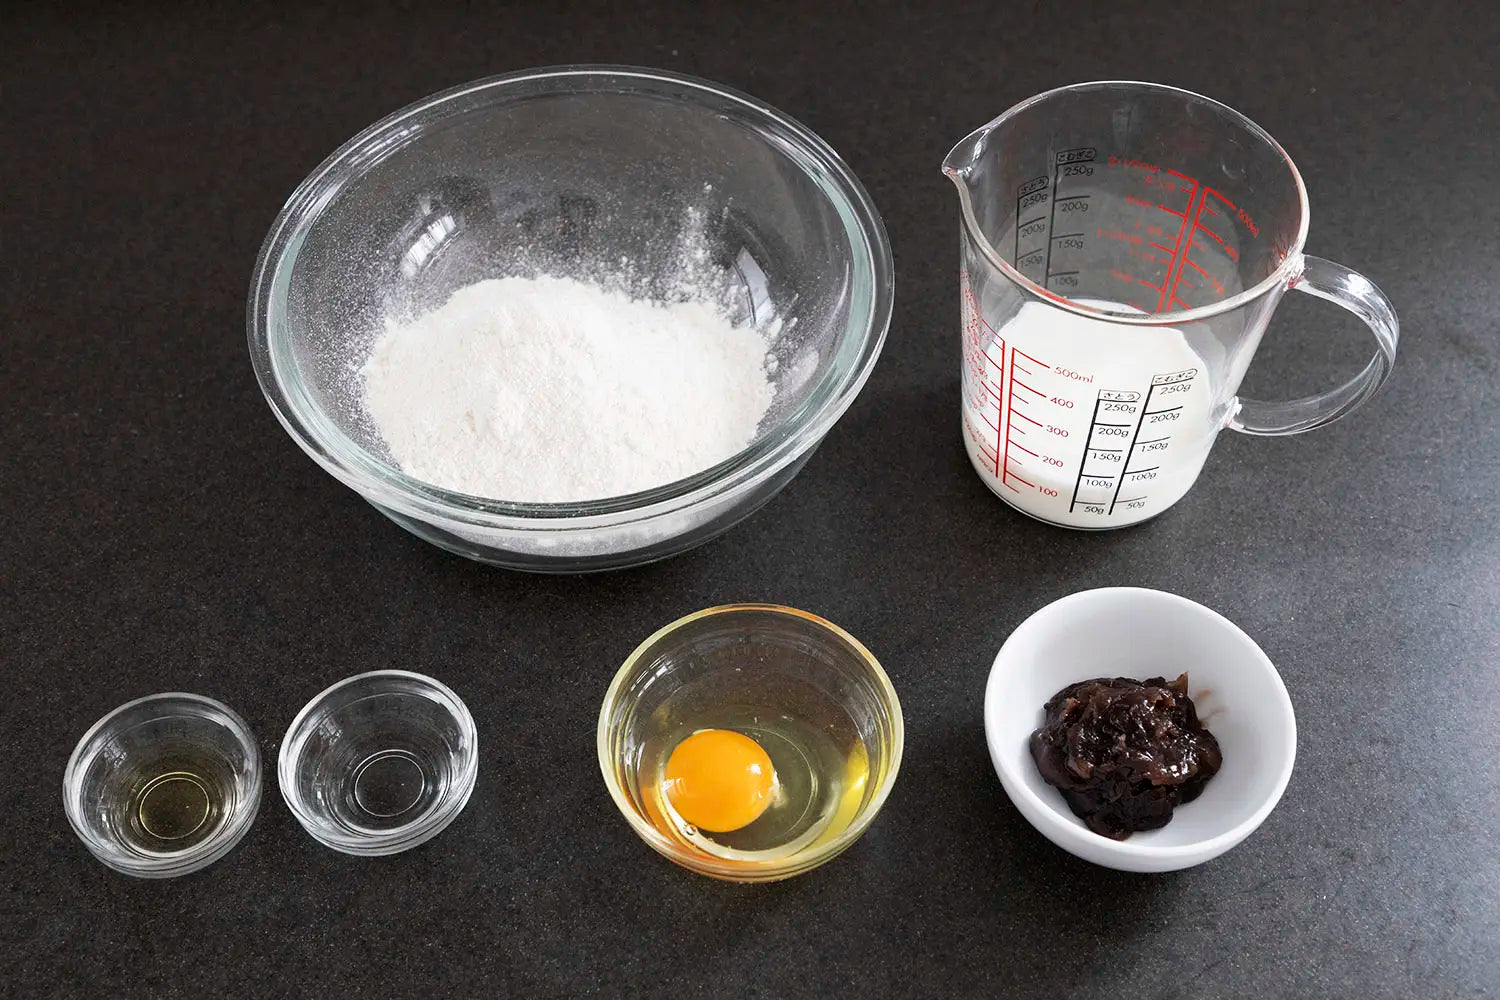 The ingredients for making obanyaki